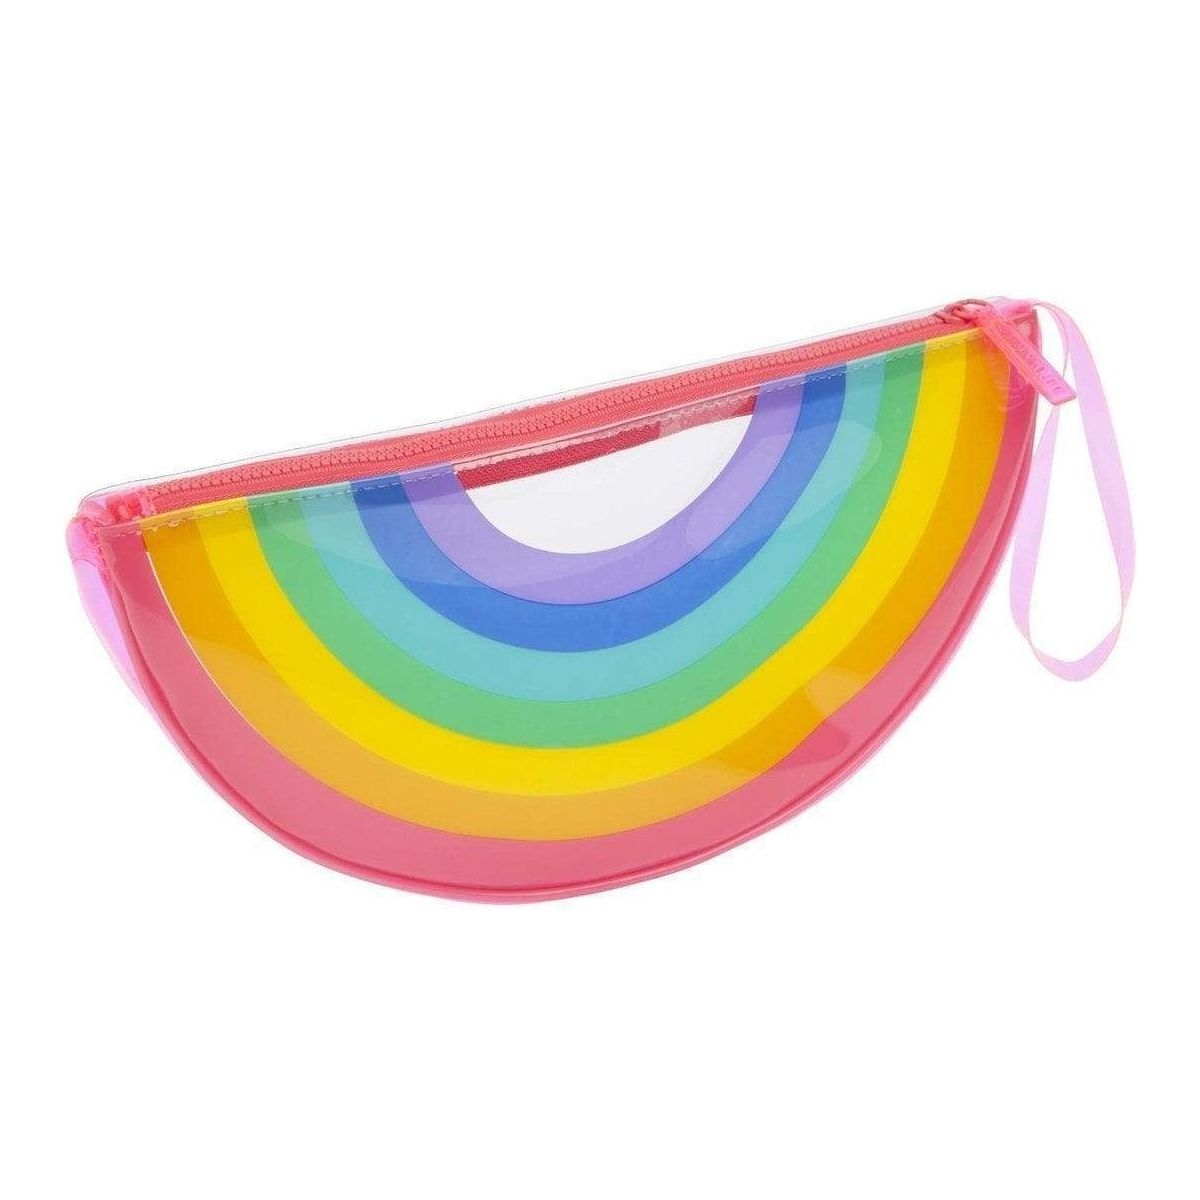 Sunny Life Hand Bags & Purses Sunnylife Rainbow See-Thru Clutch